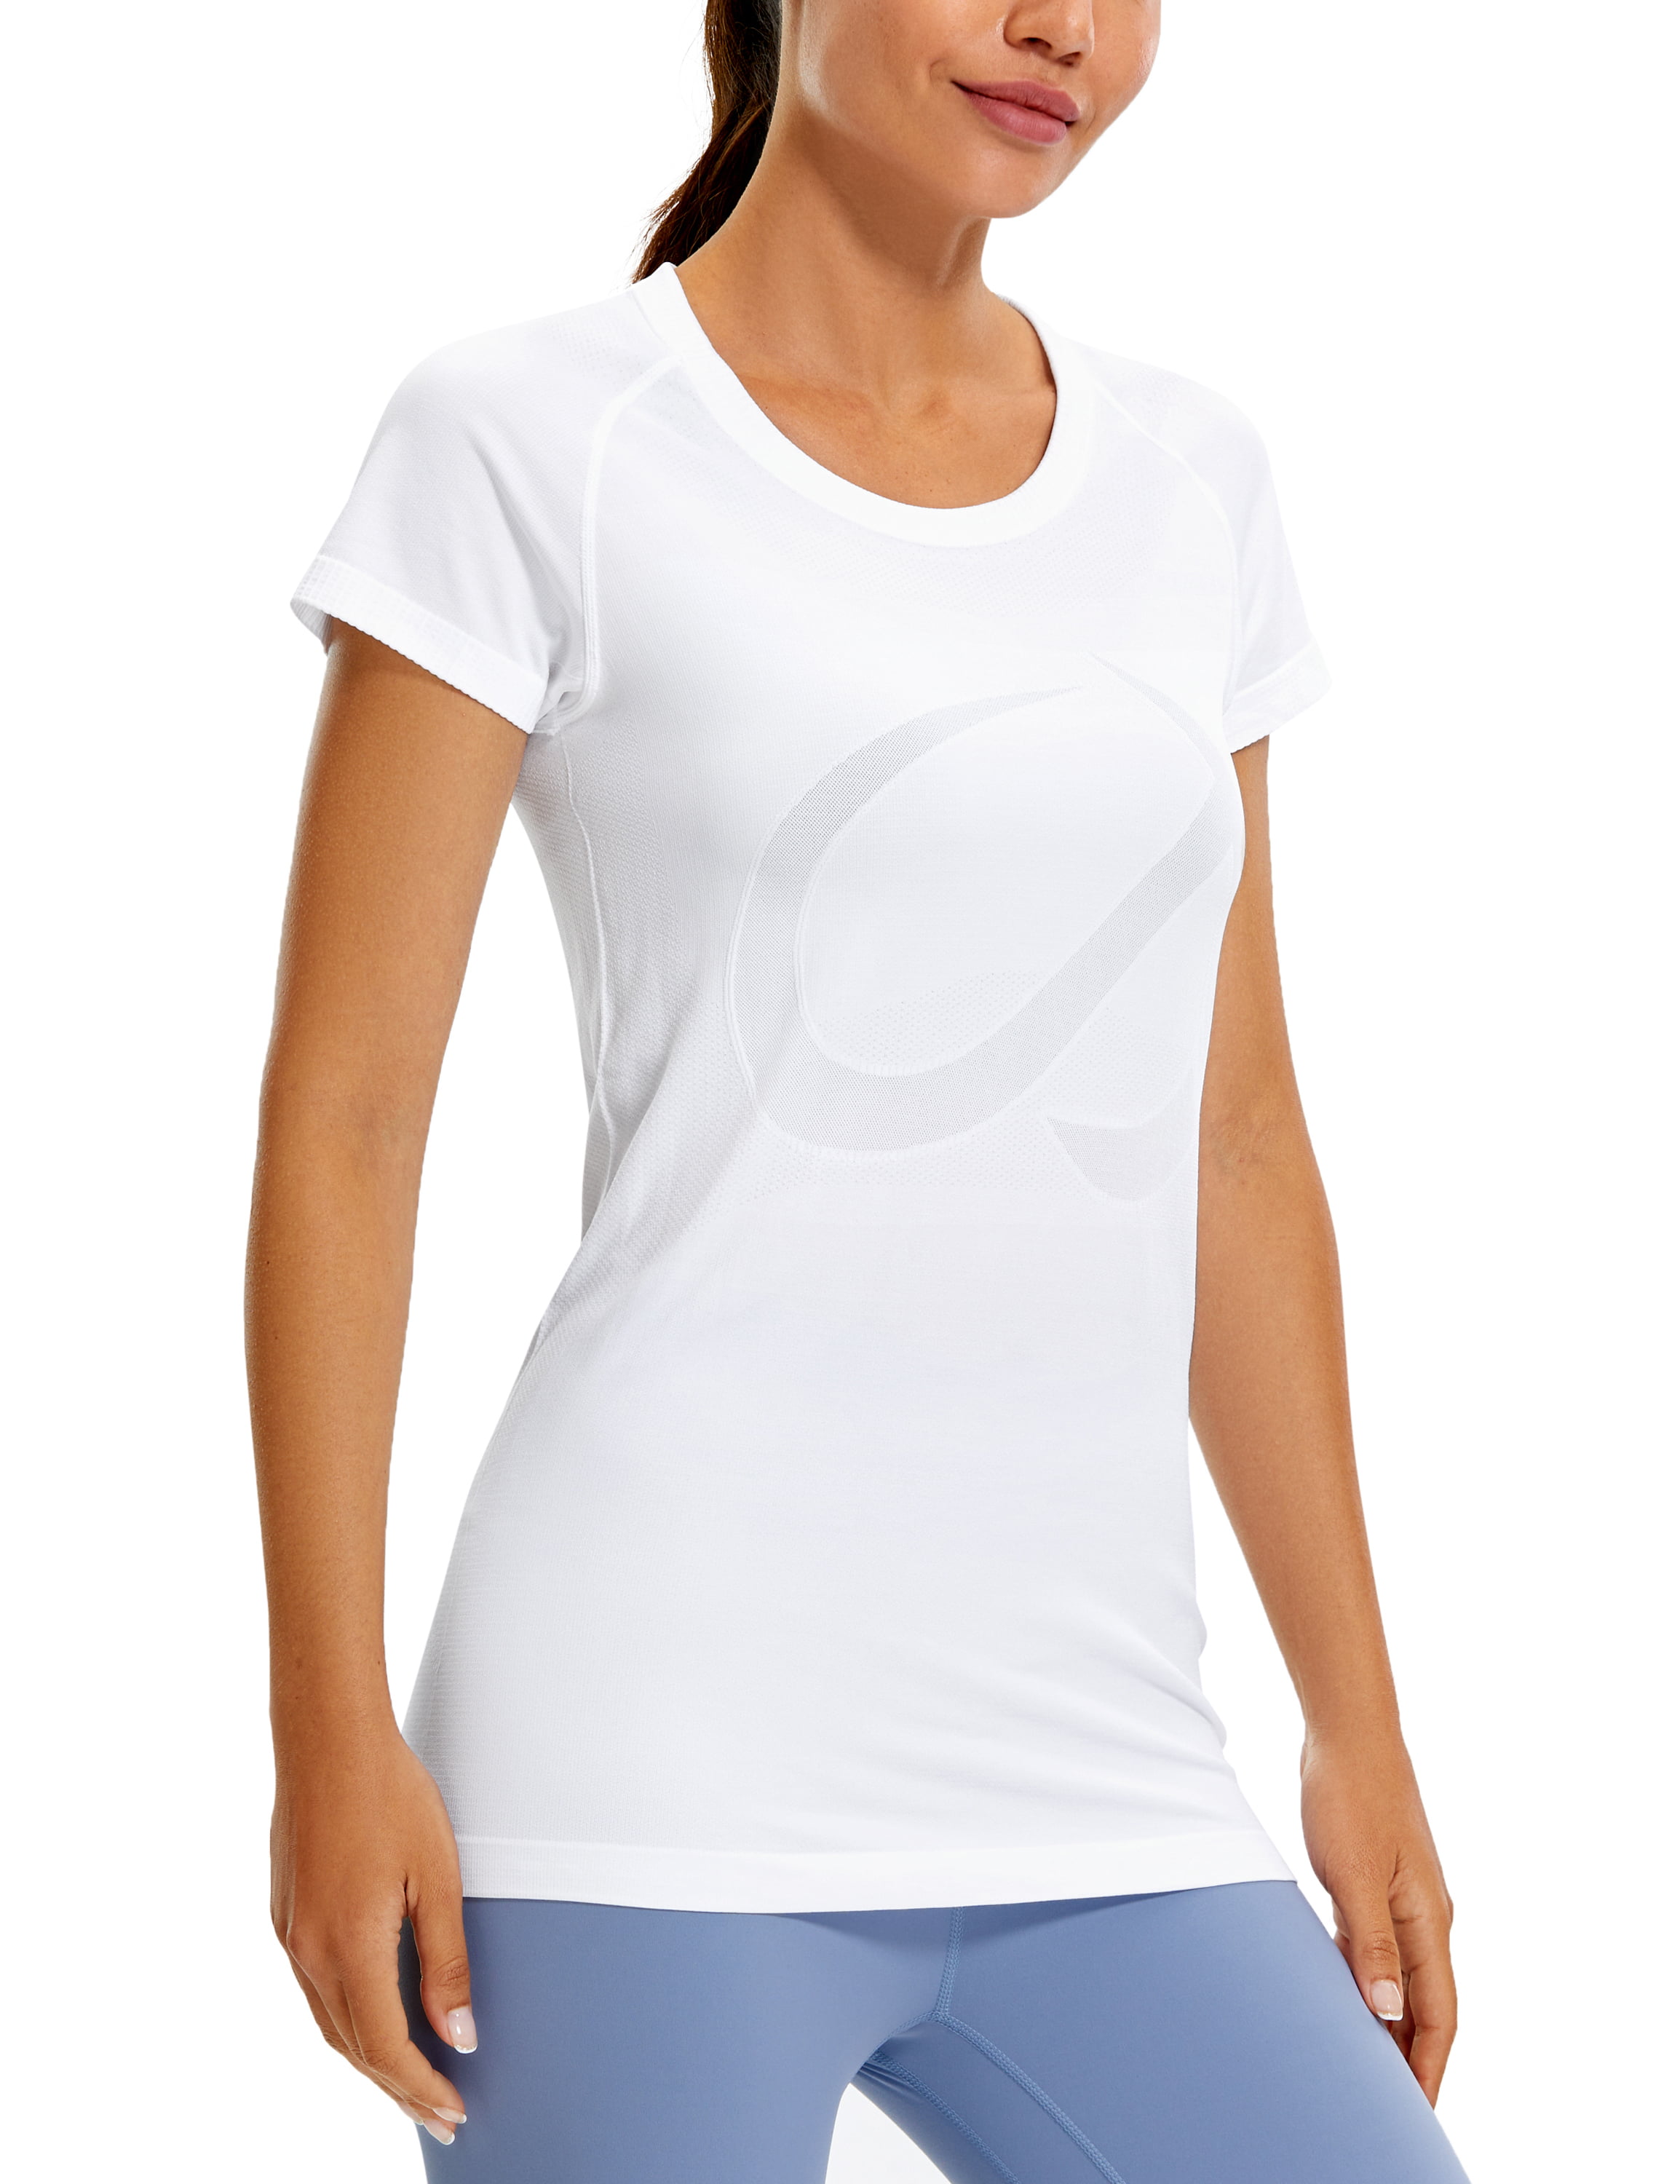 Ninedaily Womens Workout Top Running Yoga Shirt Summer Short Sleeve Casual Tunic 